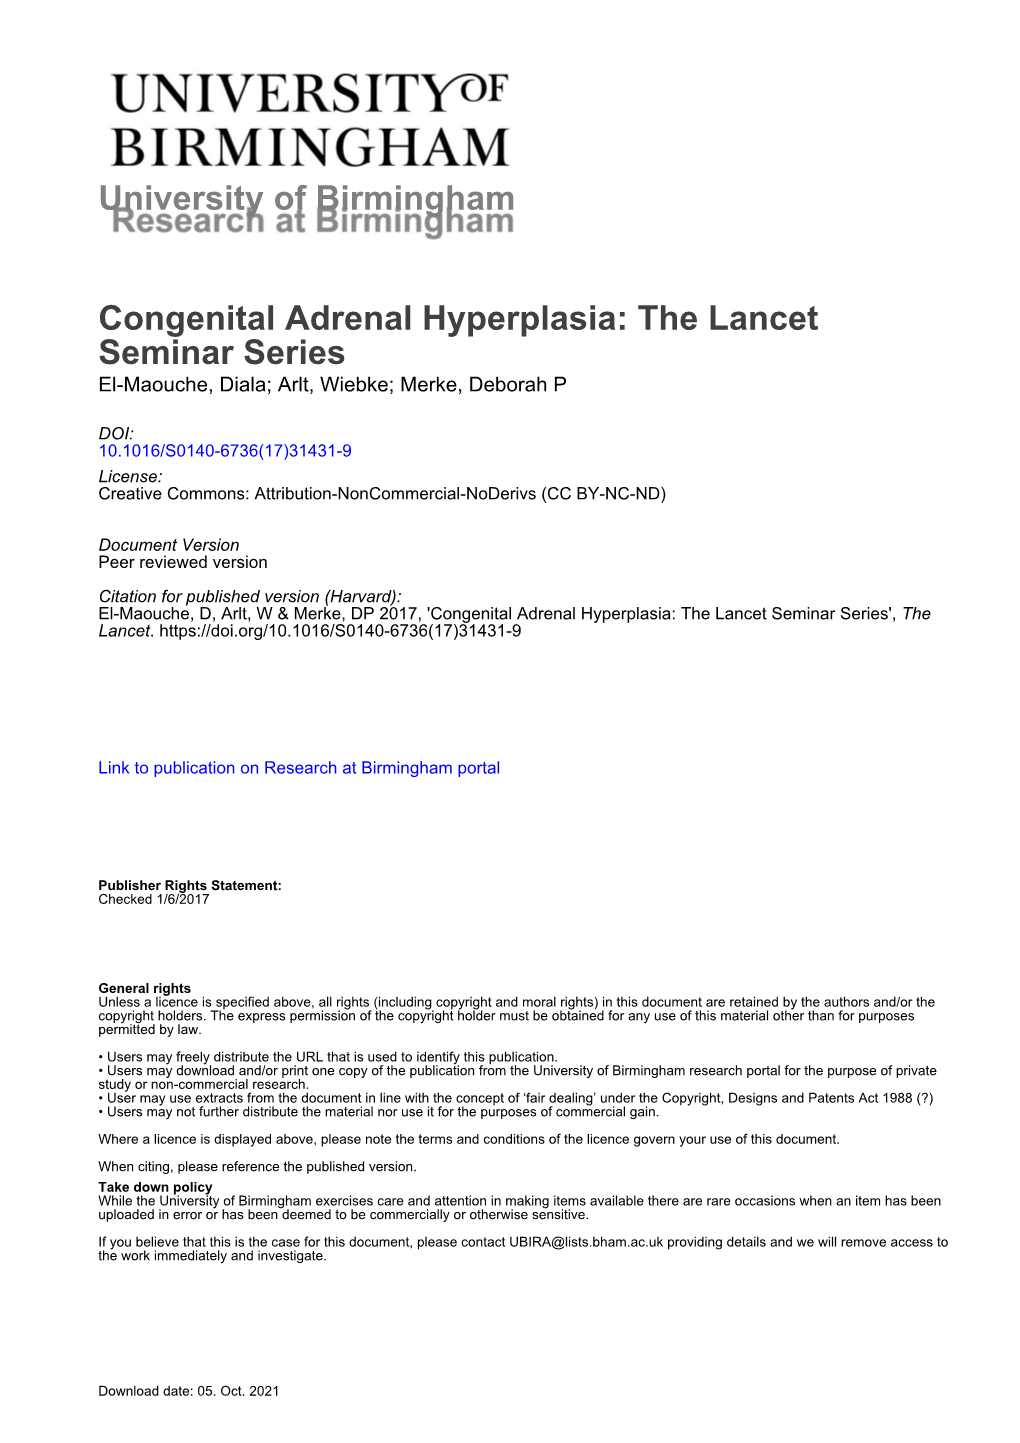 Congenital Adrenal Hyperplasia: the Lancet Seminar Series El-Maouche, Diala; Arlt, Wiebke; Merke, Deborah P